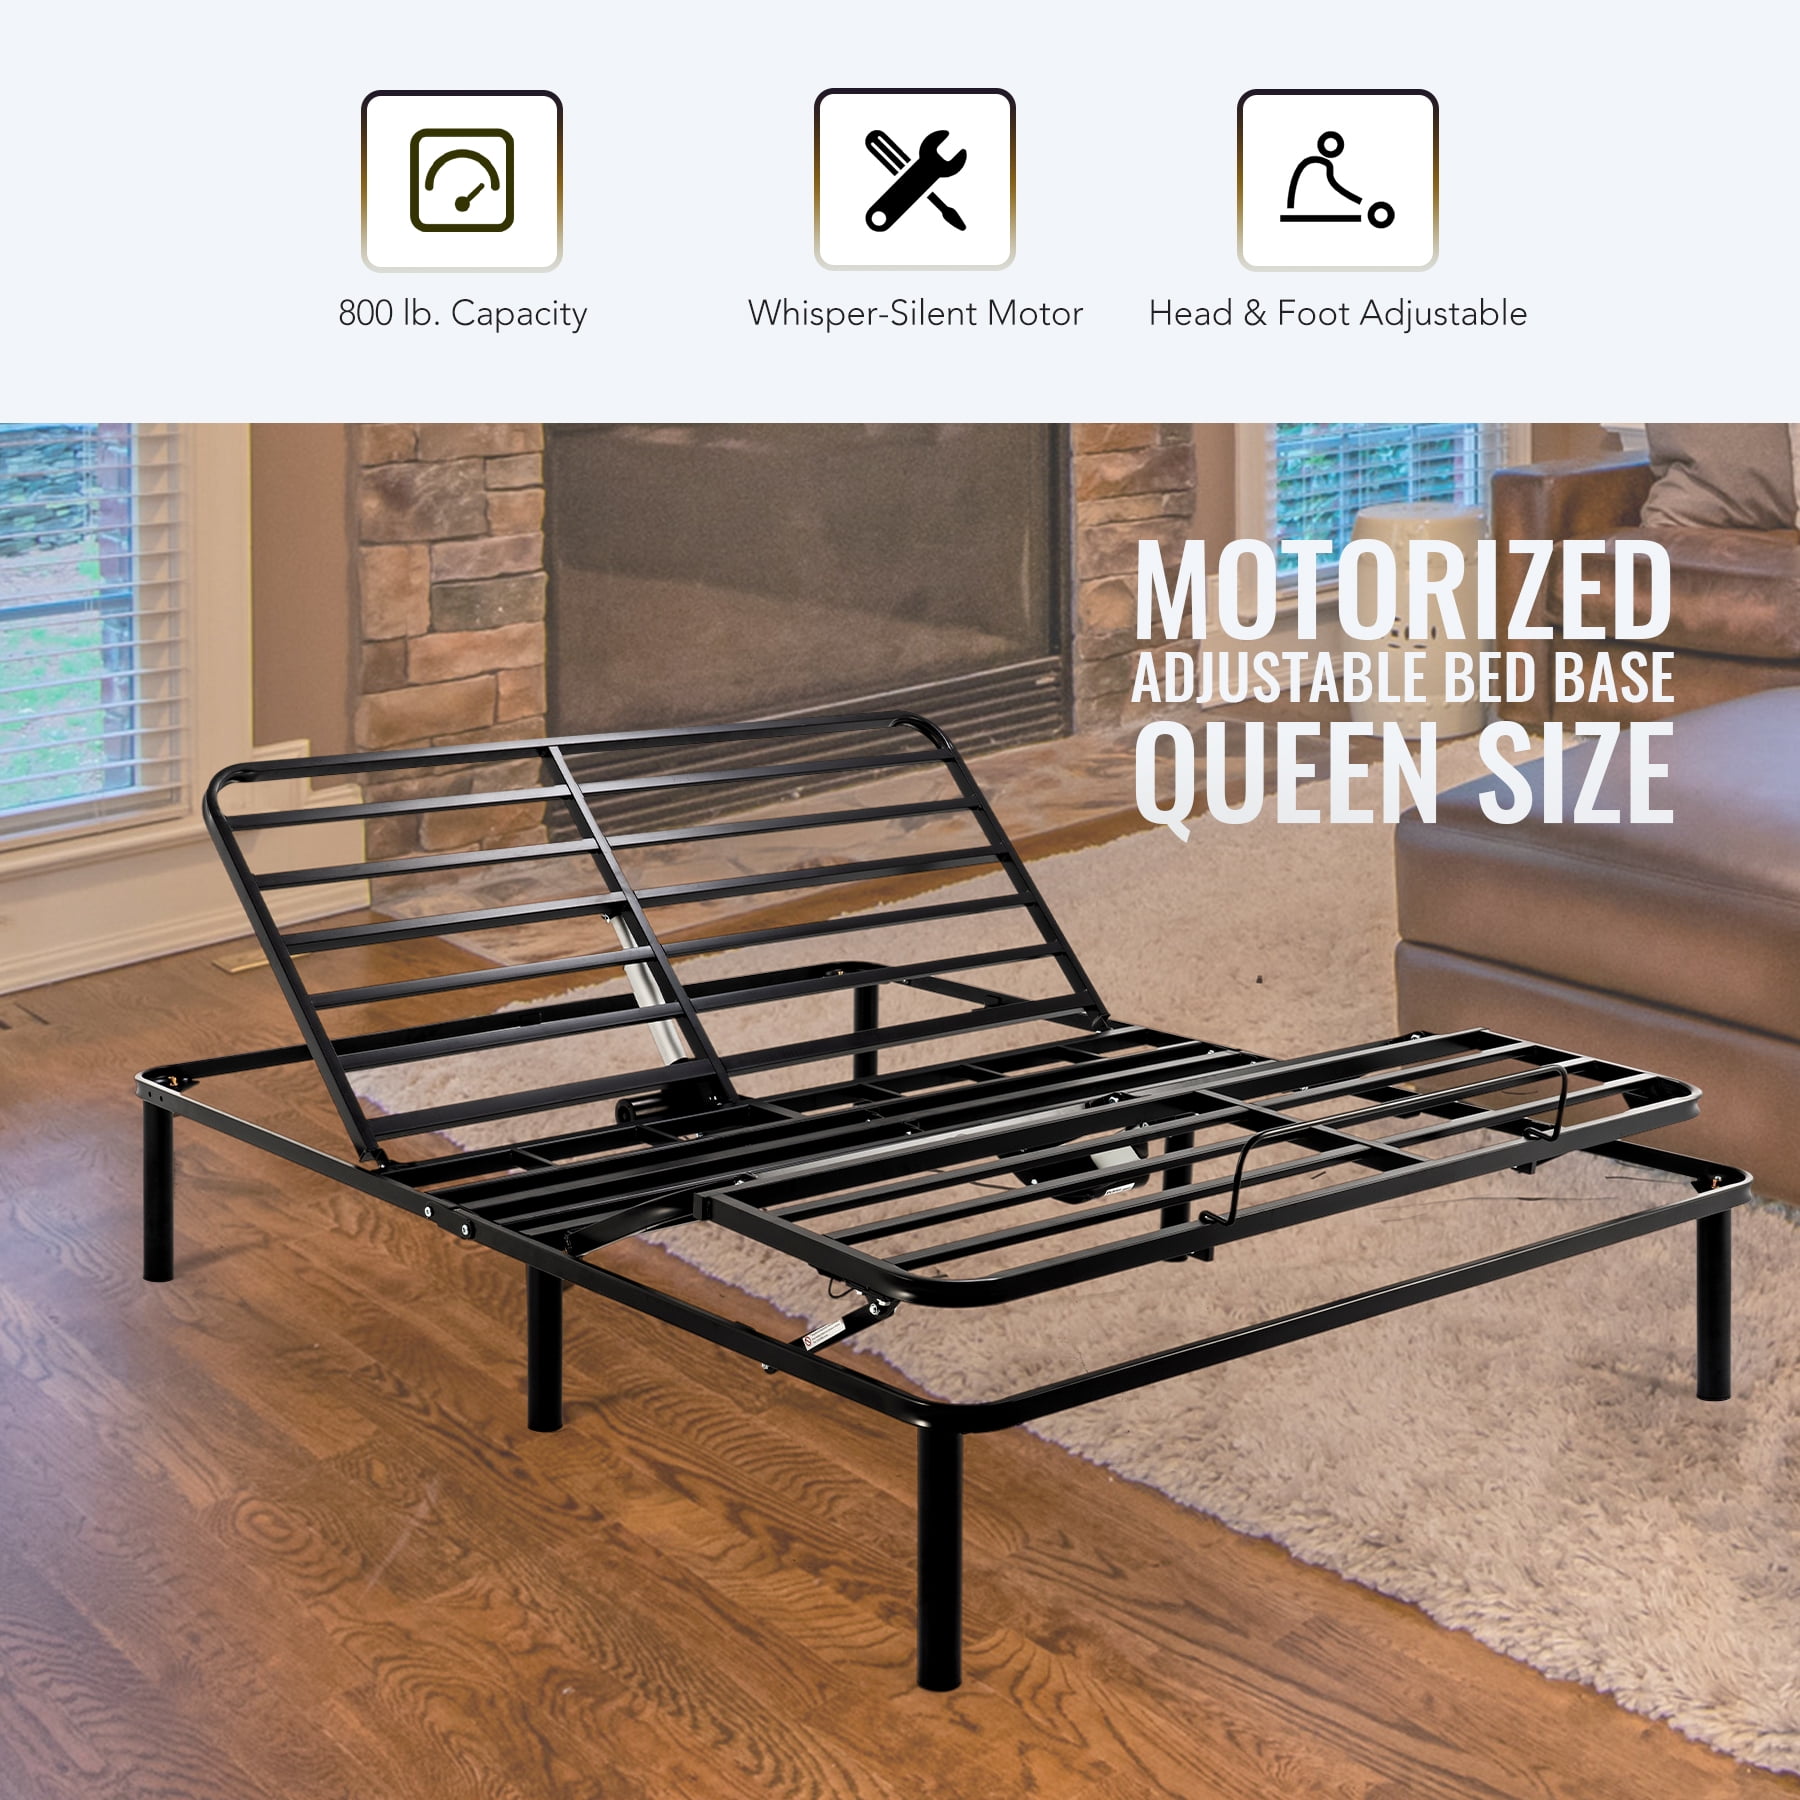 Adjustable Queen Size Electric Bed, Adjustable Bed Base Queen